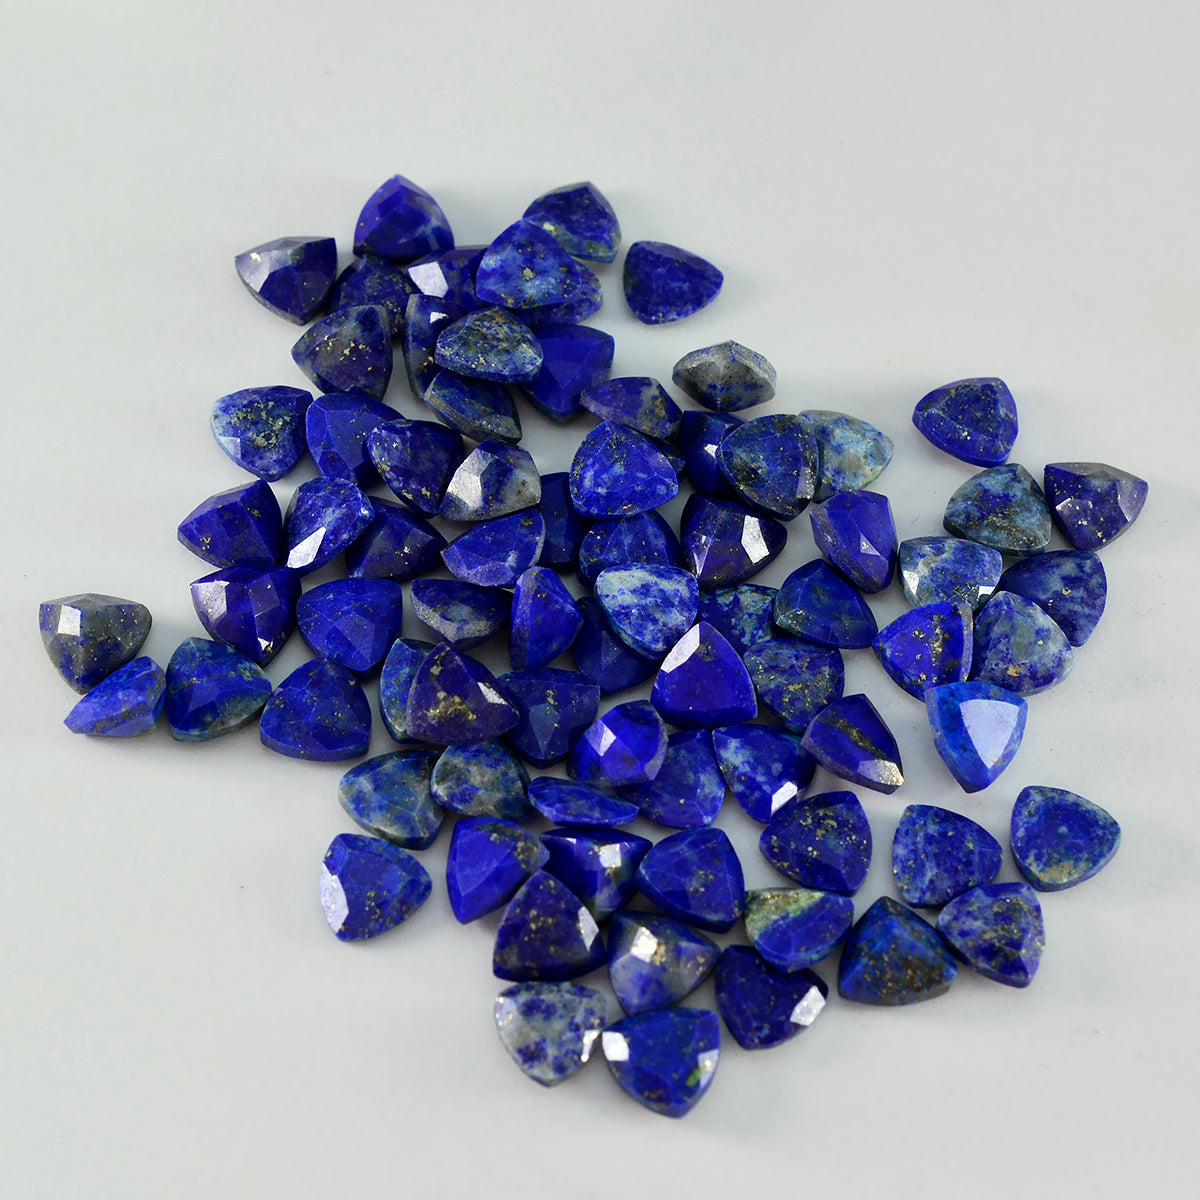 riyogems 1 st naturlig blå lapis lazuli fasetterad 5x5 mm biljoner form superb kvalitet ädelsten